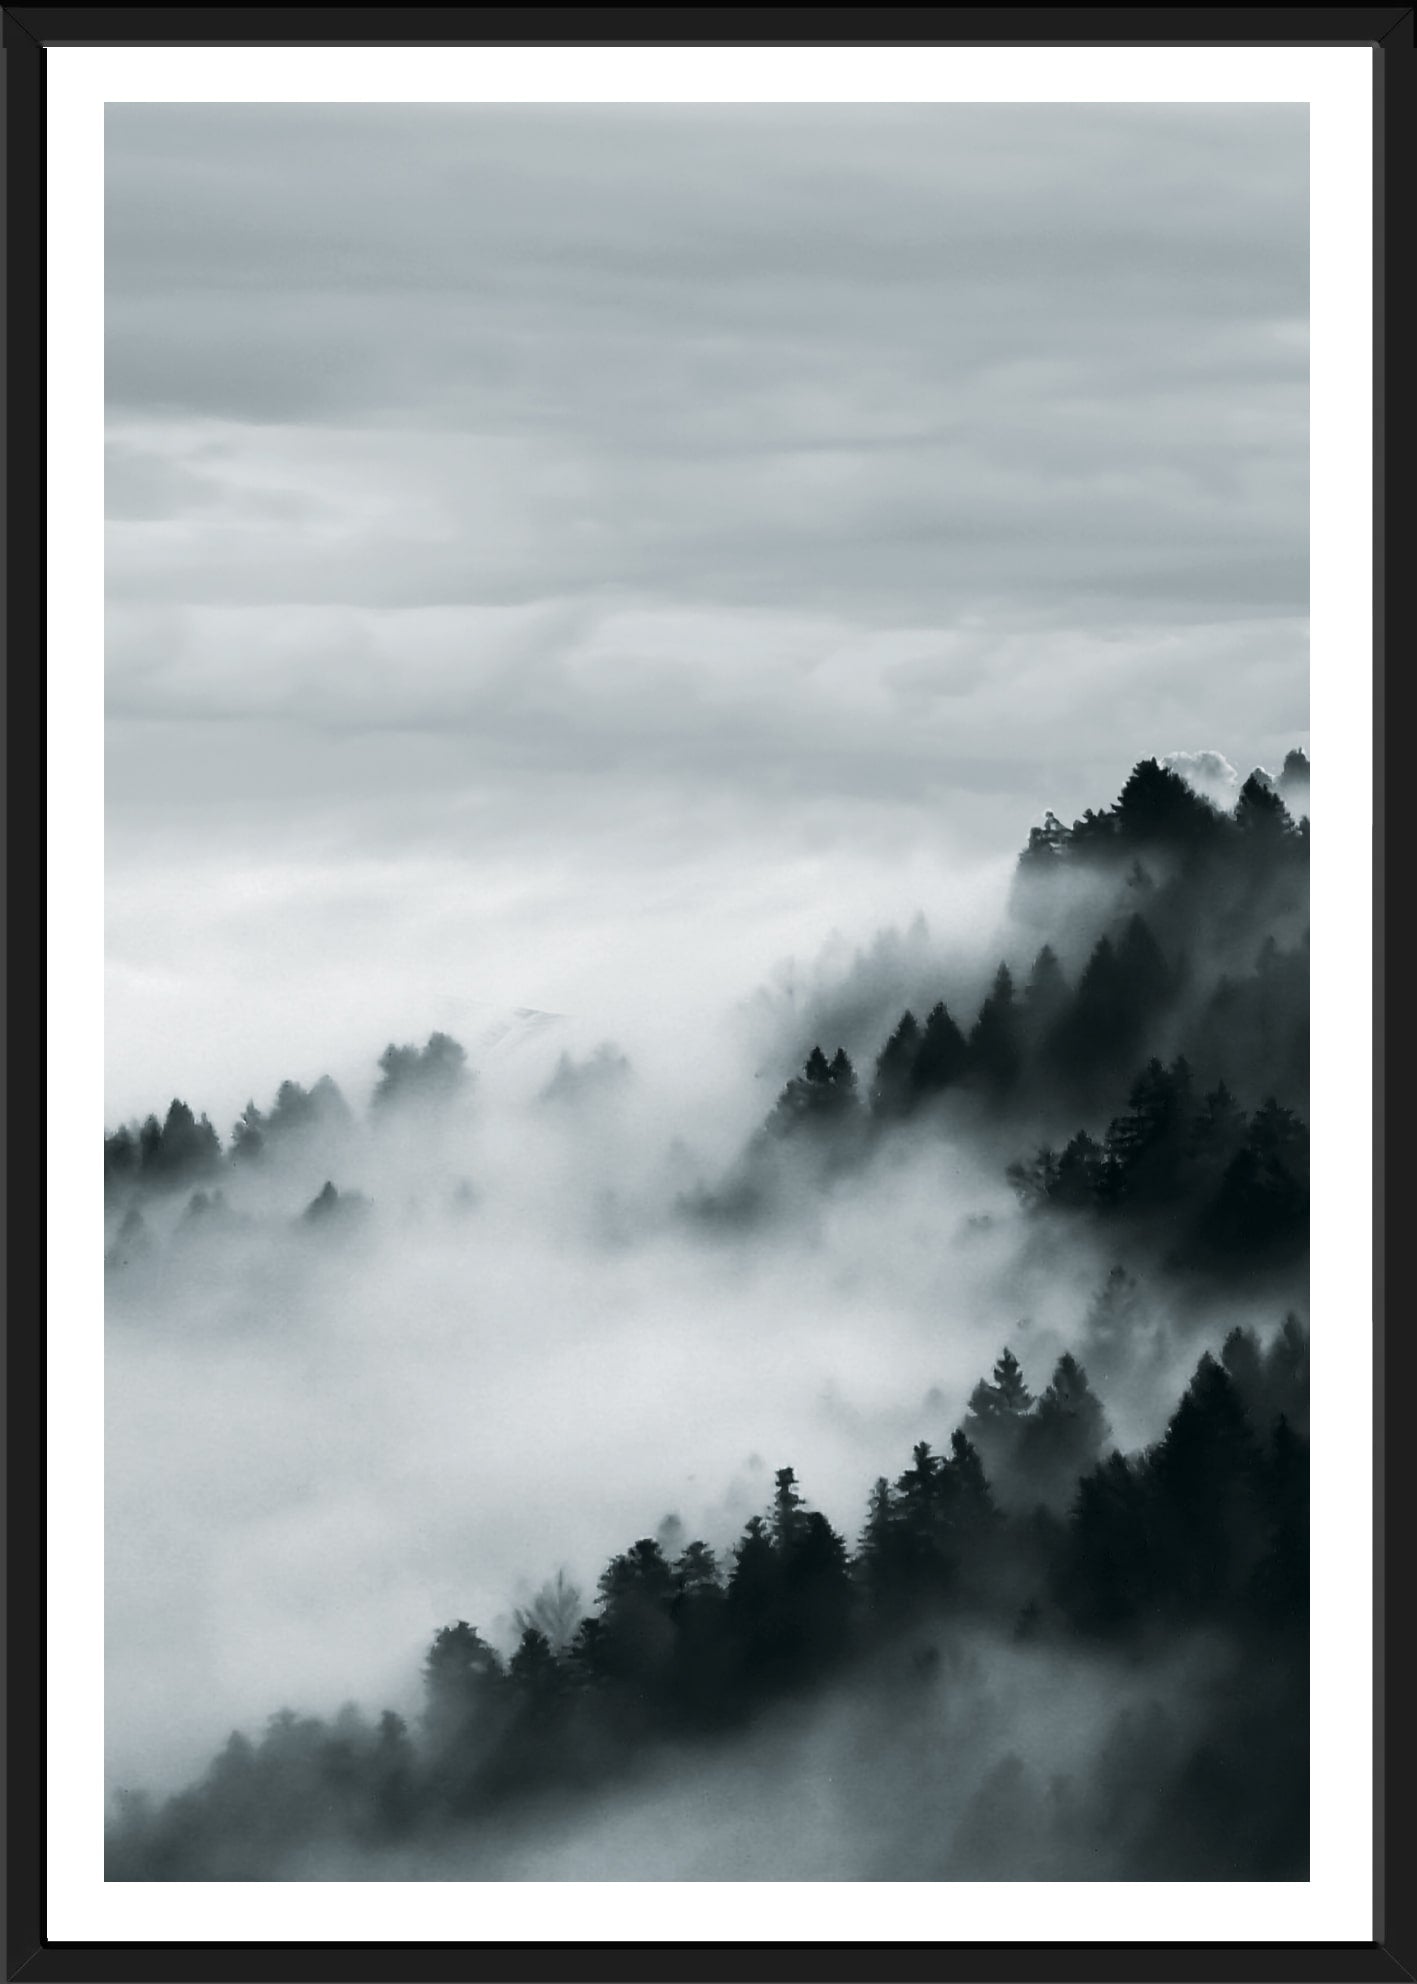 My Misty Secret Forest | Poster